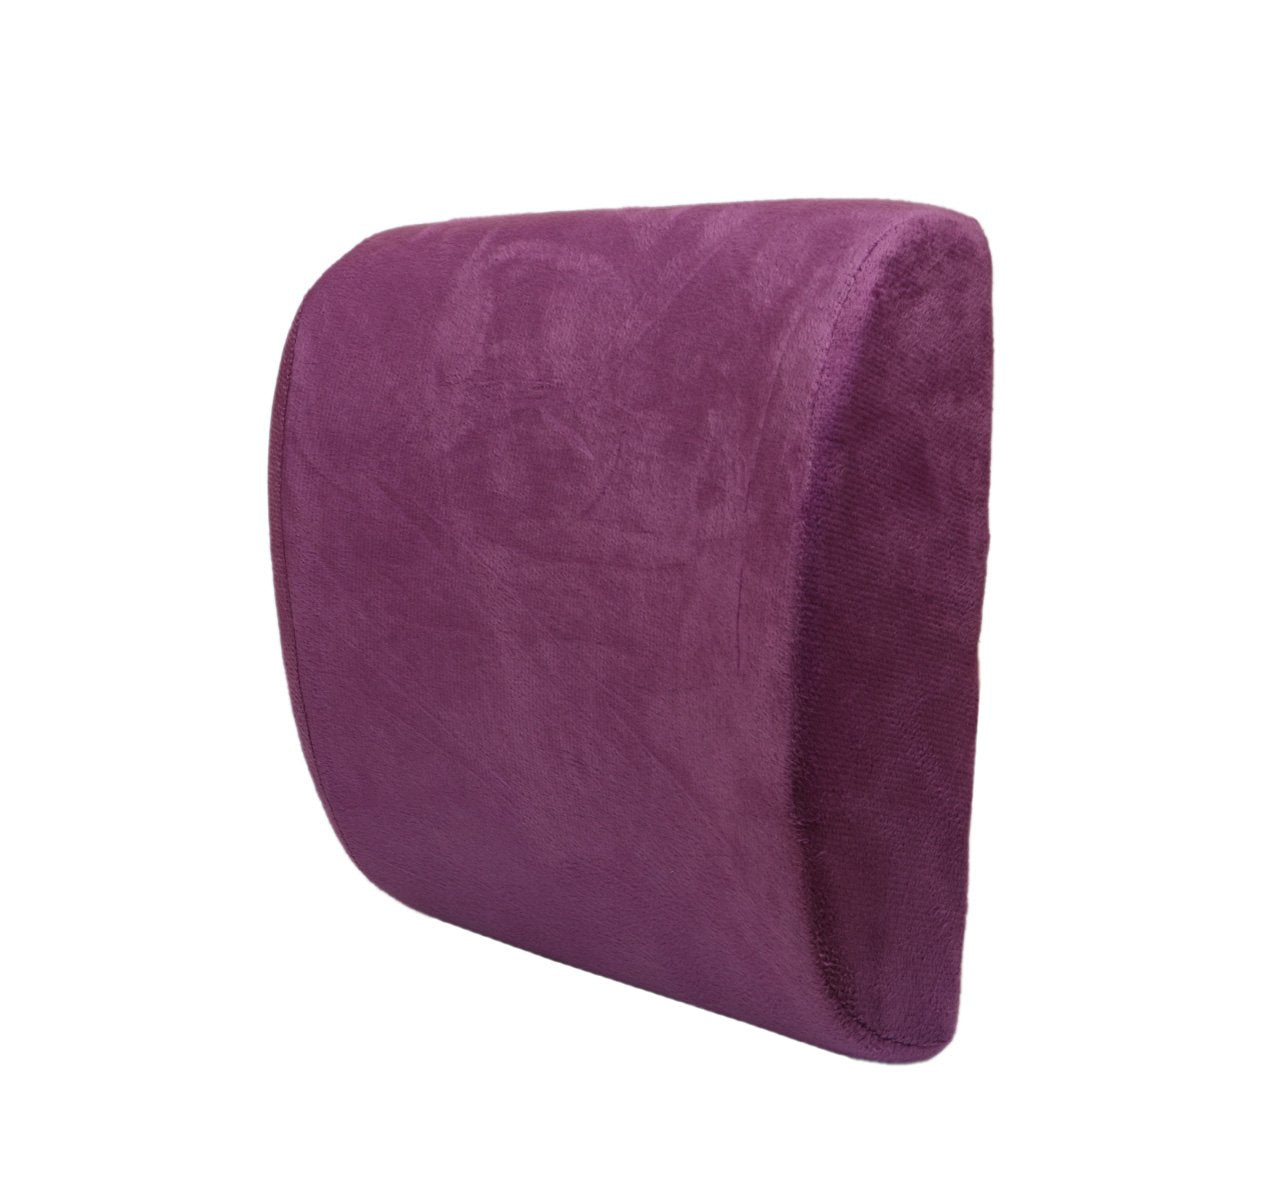 Importikaah-Orthopedic-Backrest-Cushion-Pillow-memory-foam-Lower Back-Support-cushion